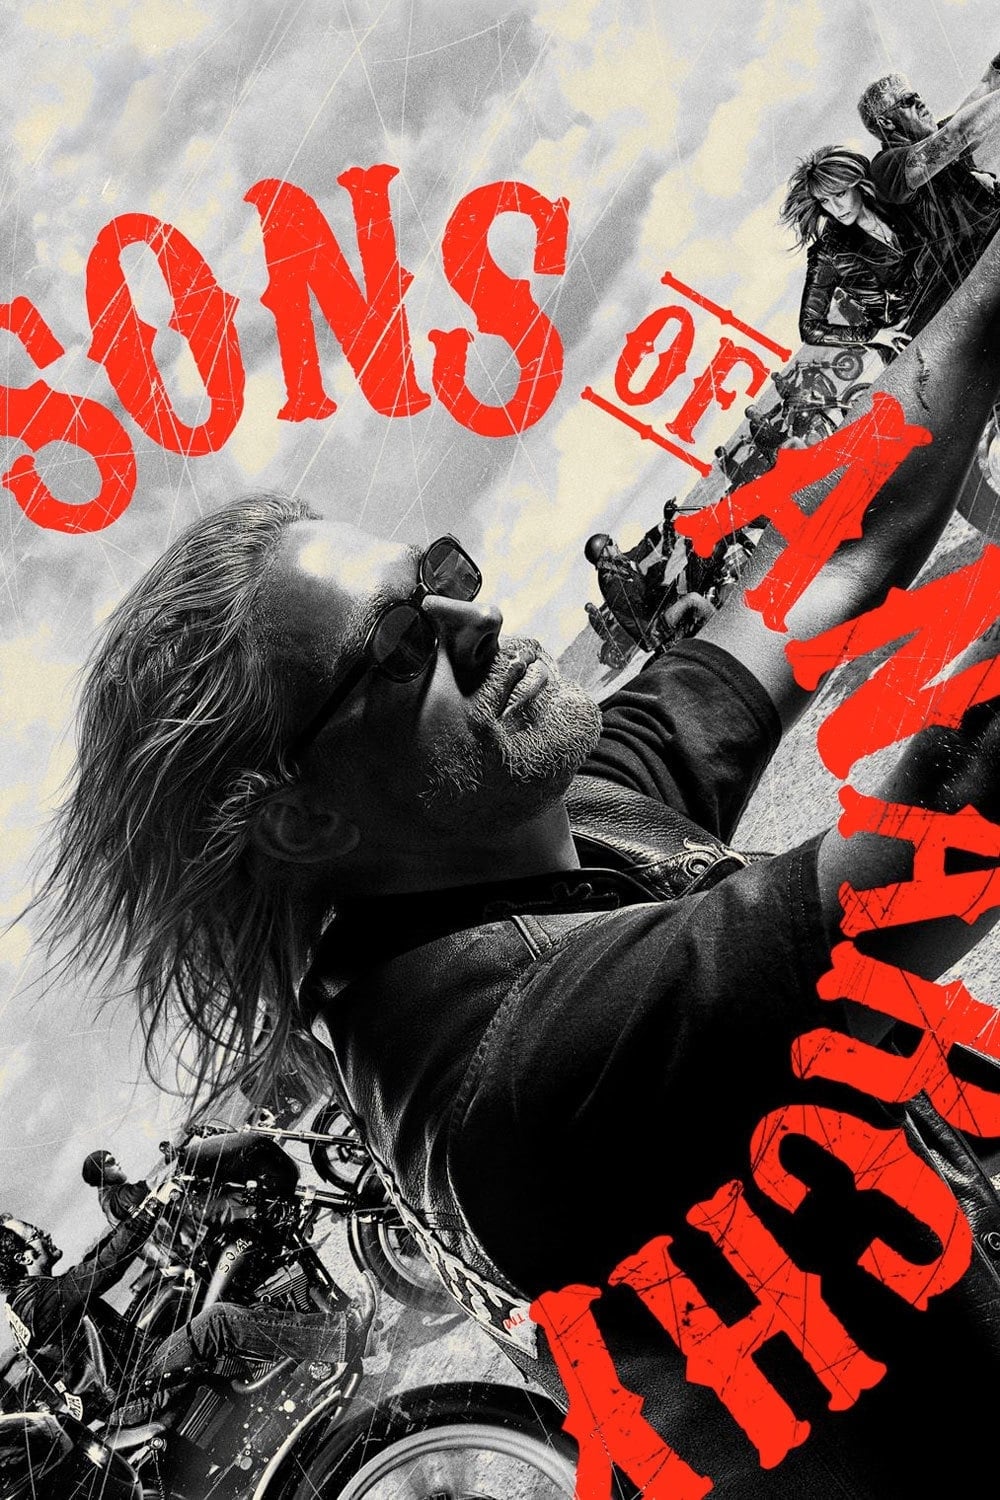 Sons of Anarchy (2008 - 2014) Seizoen 4 Disc 3 BD50